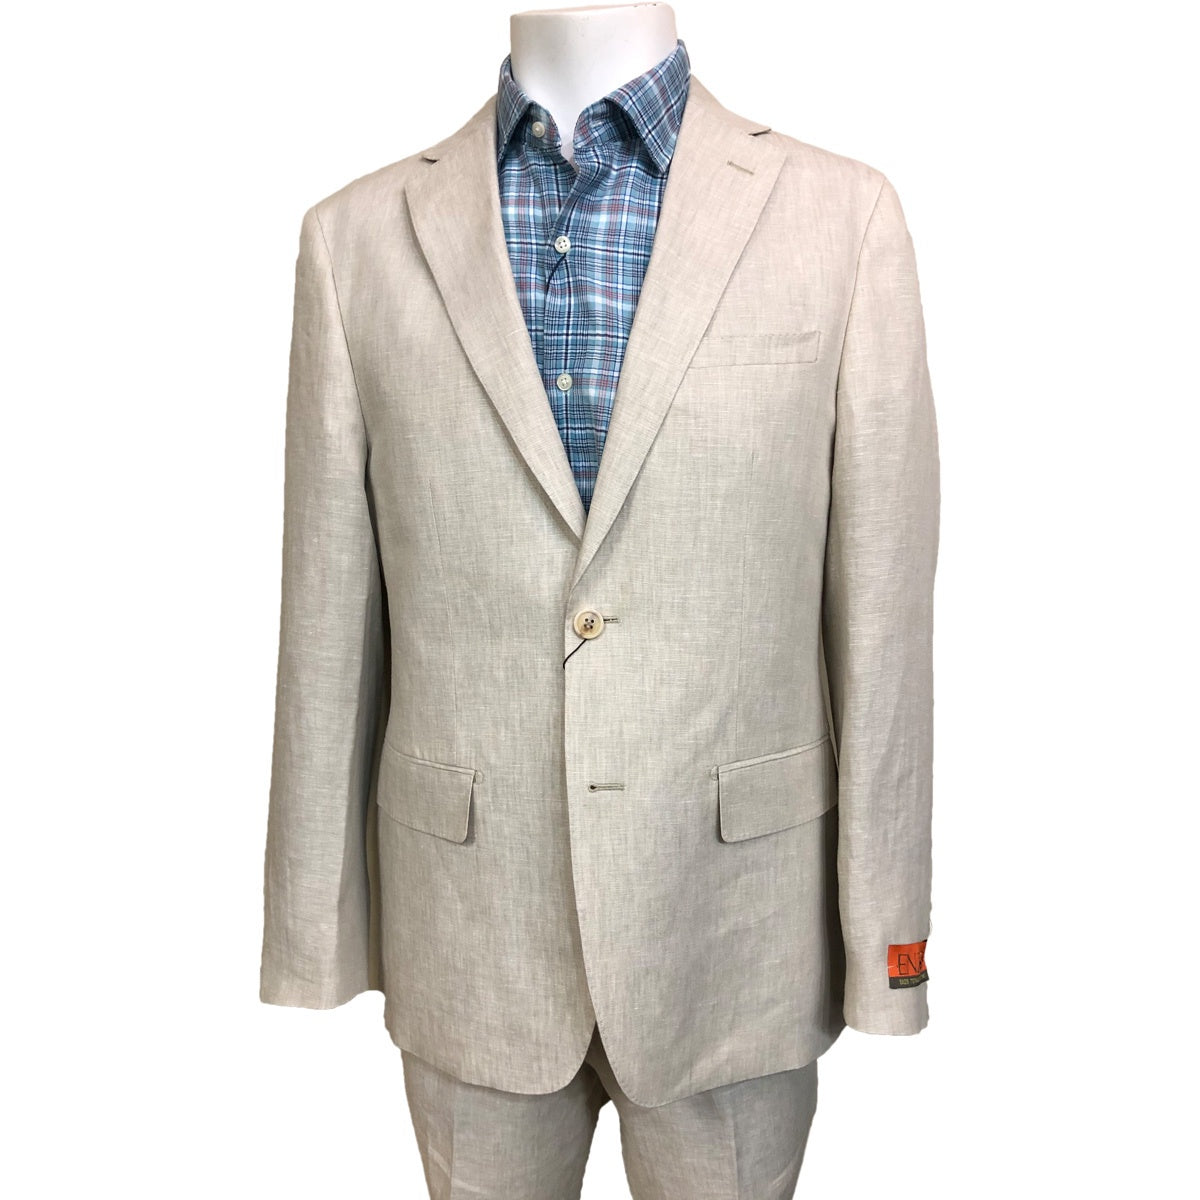 ENZO 2 Piece Linen Suit in Natural